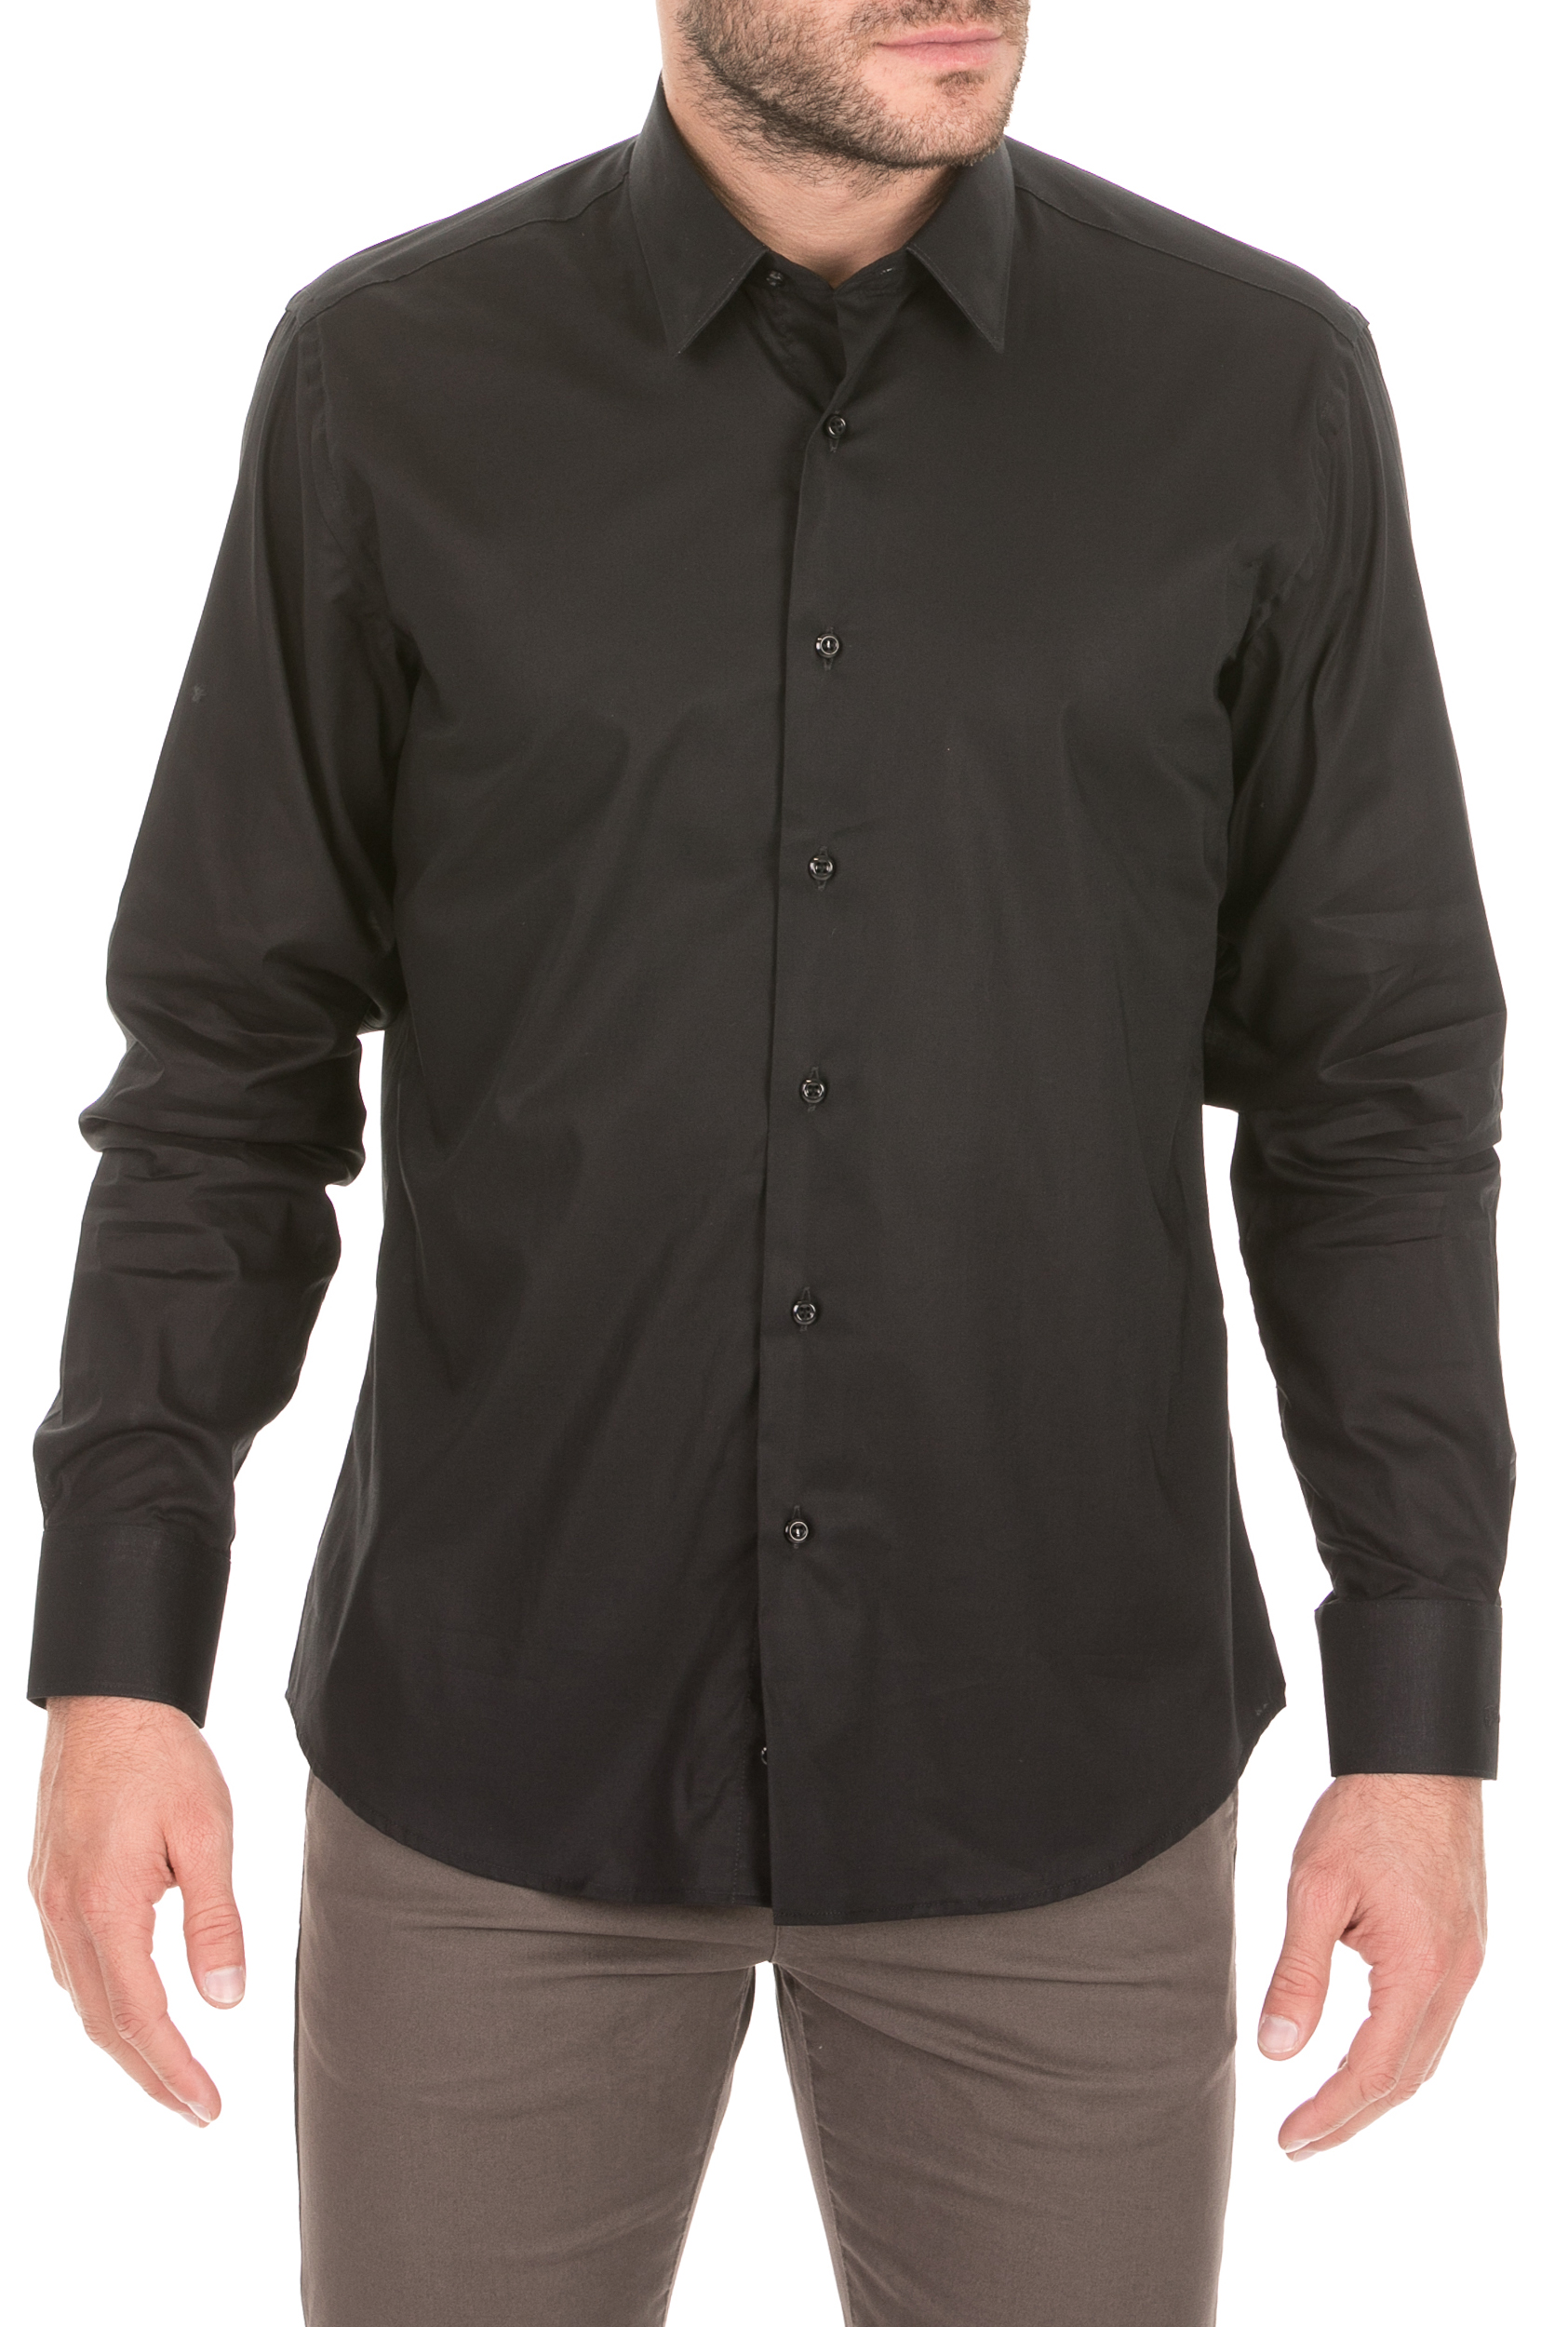 JUST CAVALLI - Ανδρικό πουκάμισο JUST CAVALLI μαύρο Ανδρικά/Ρούχα/Πουκάμισα/Μακρυμάνικα